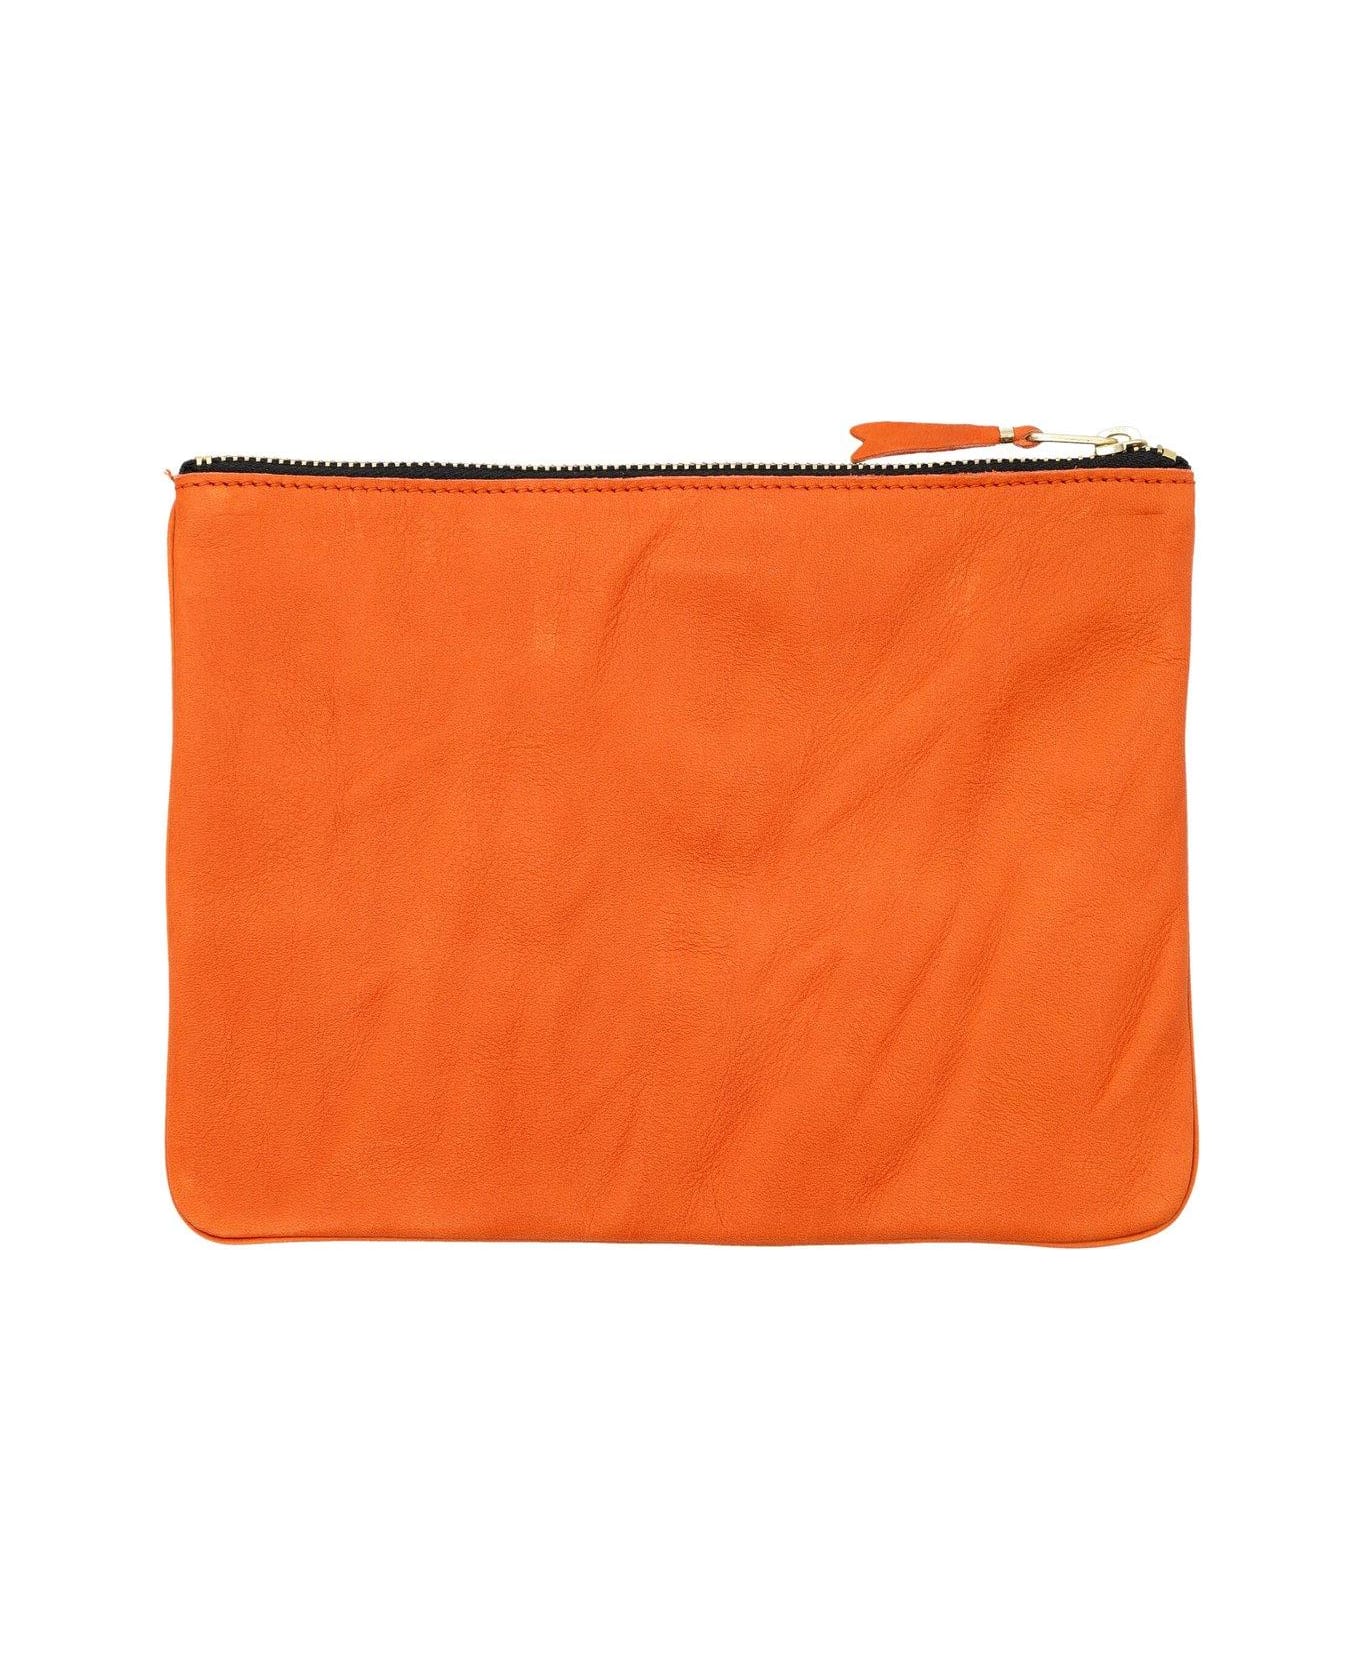 Comme des Garçons Wallet Logo Printed Zip-up Pouch - Burnt Orange バッグ